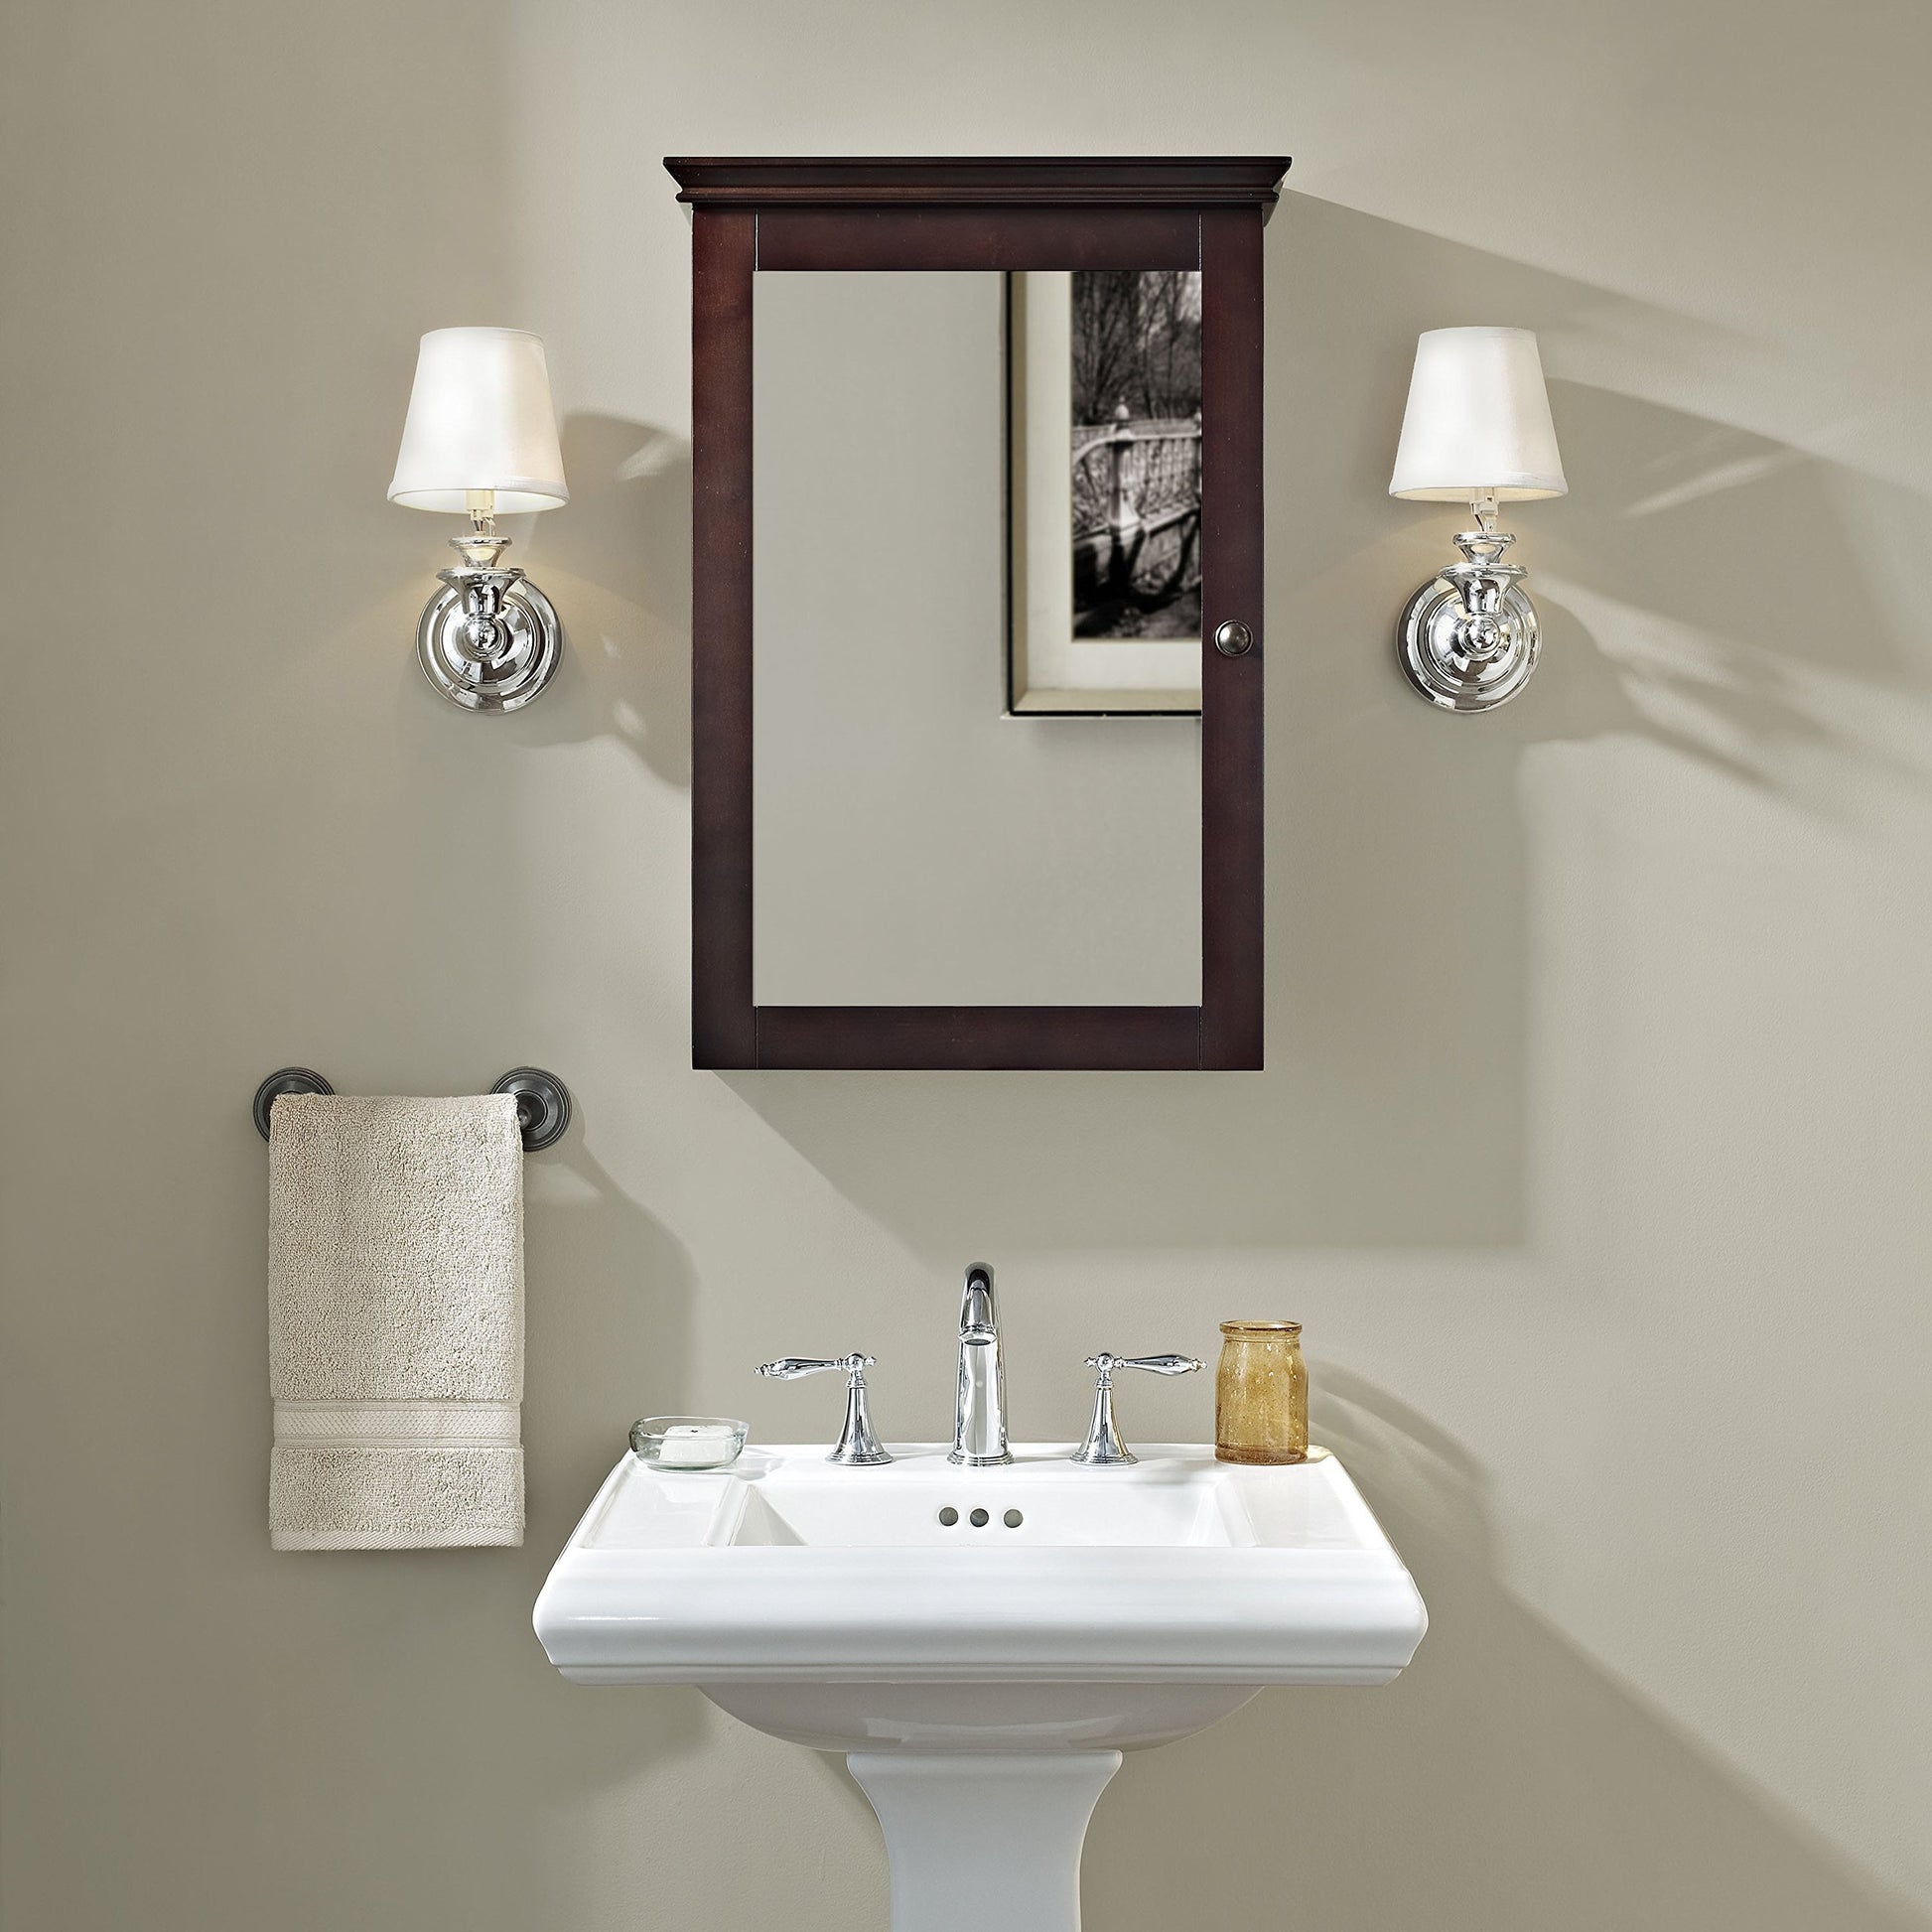 Get crosley furniture lydia mirrored bathroom wall cabinet espresso